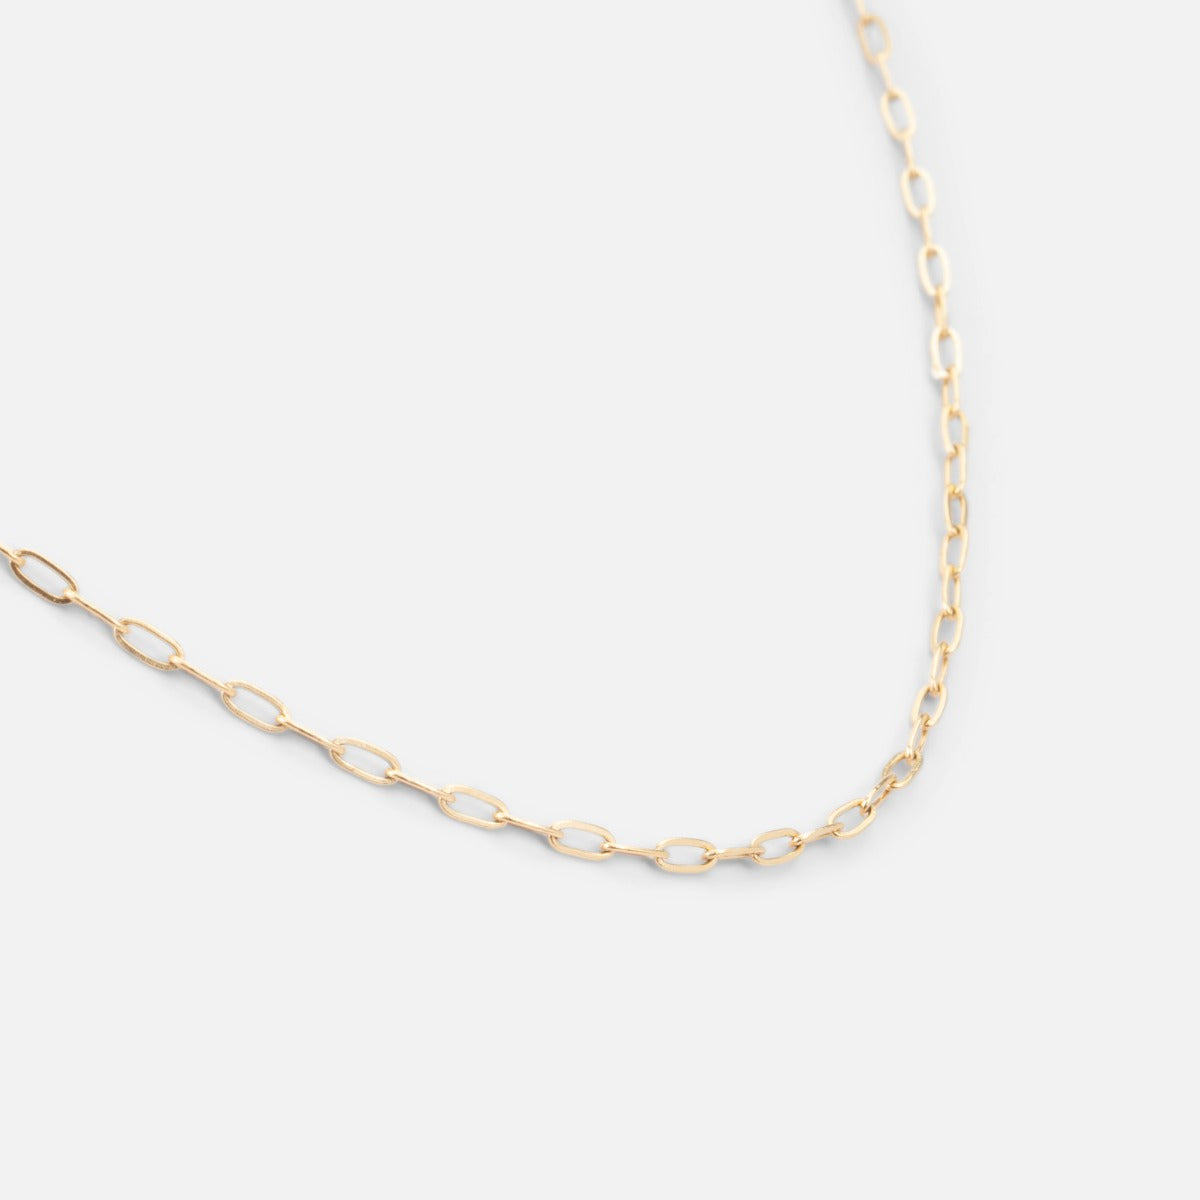 Golden stainless steel chain (18 '')